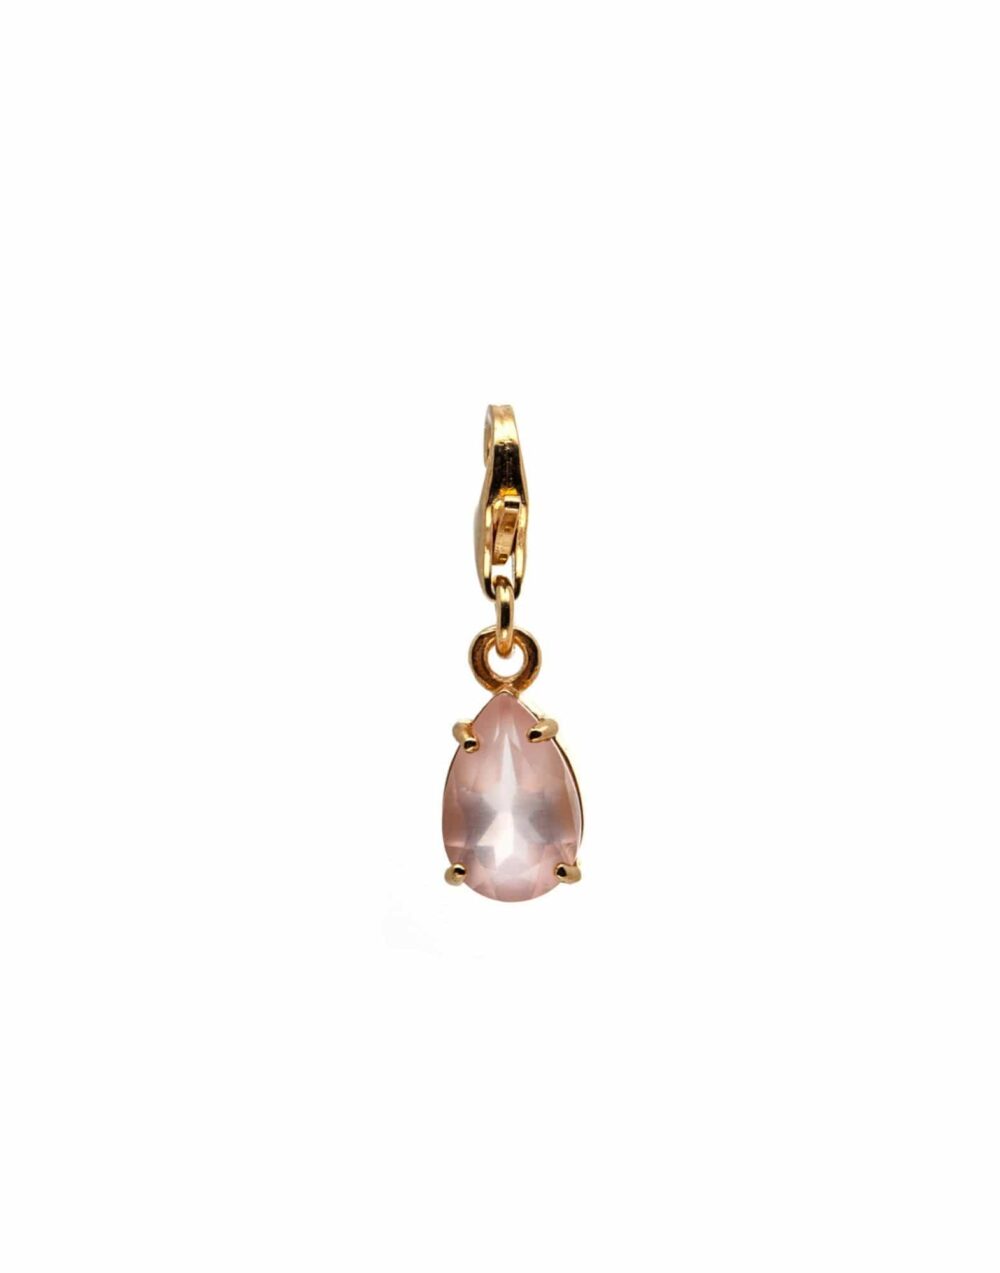 Thais Bernardes jewellery rose quartz charm